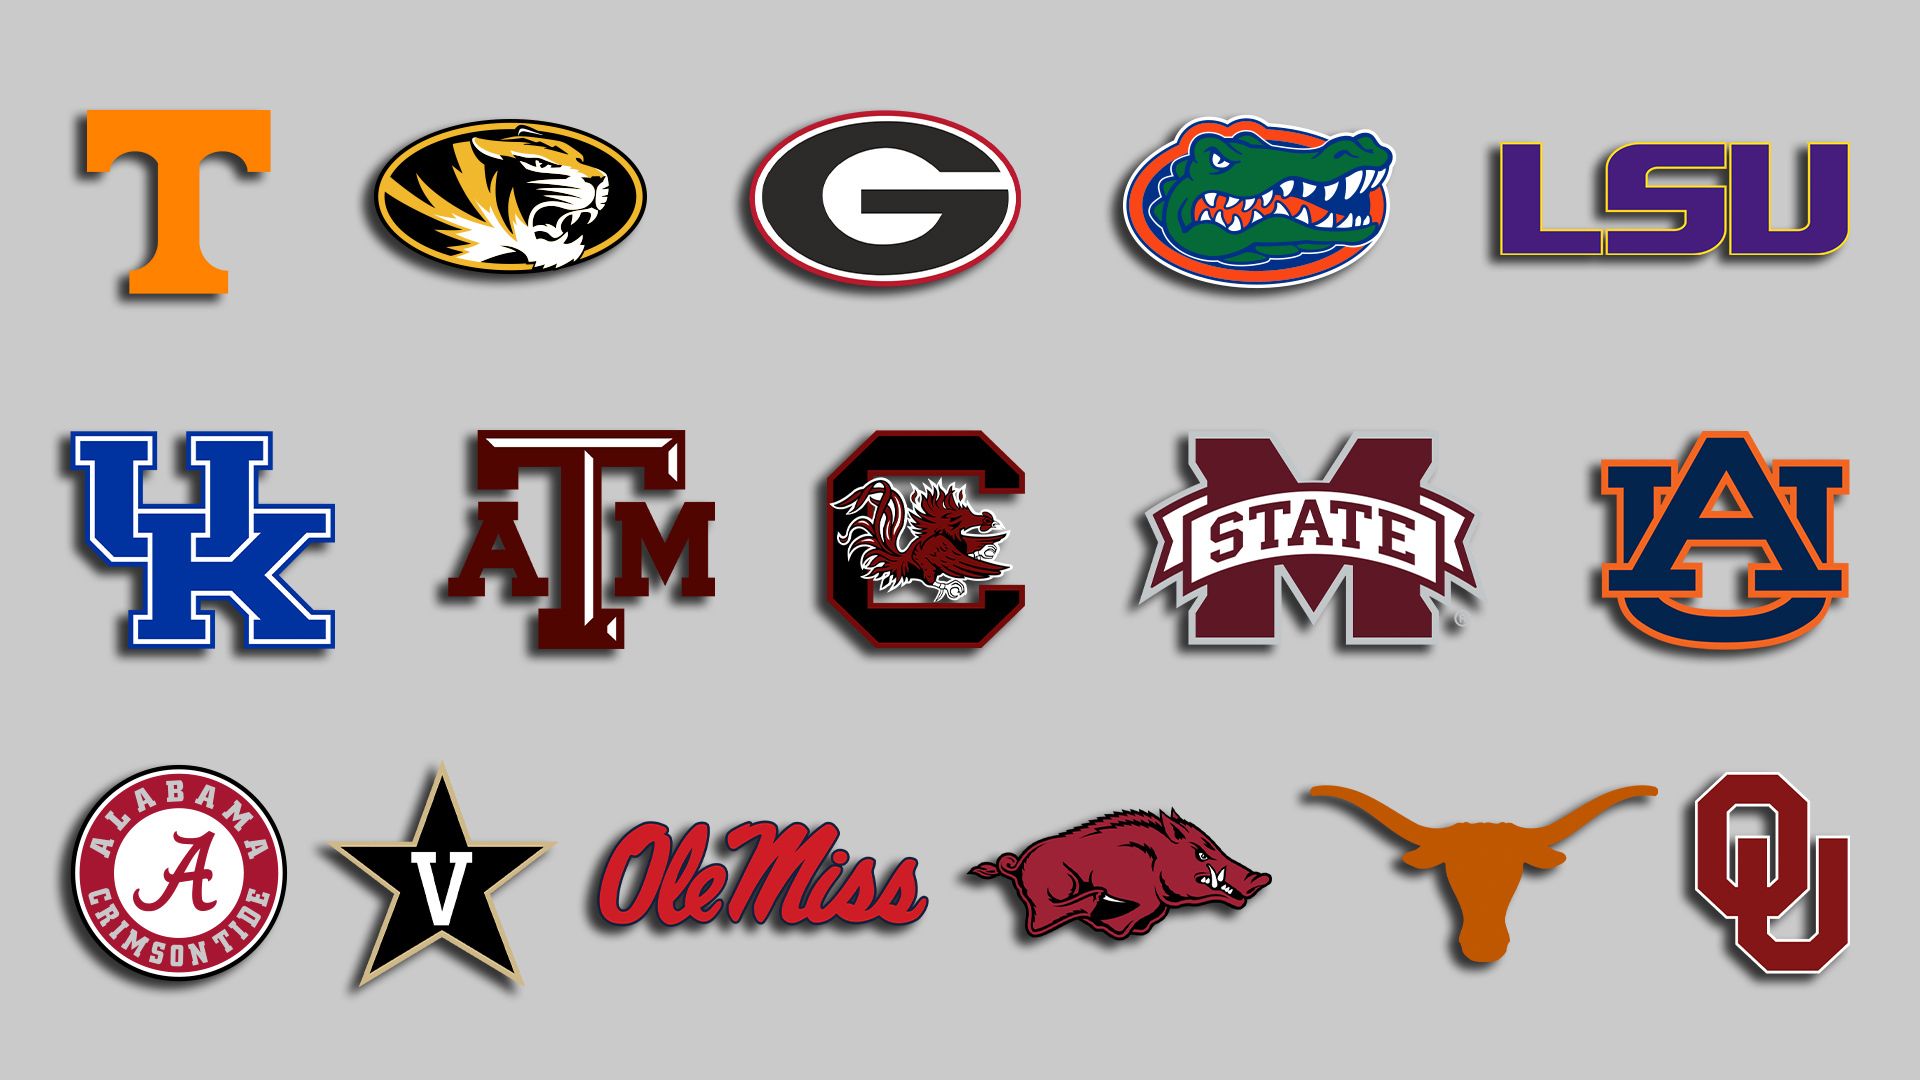 SEC logos